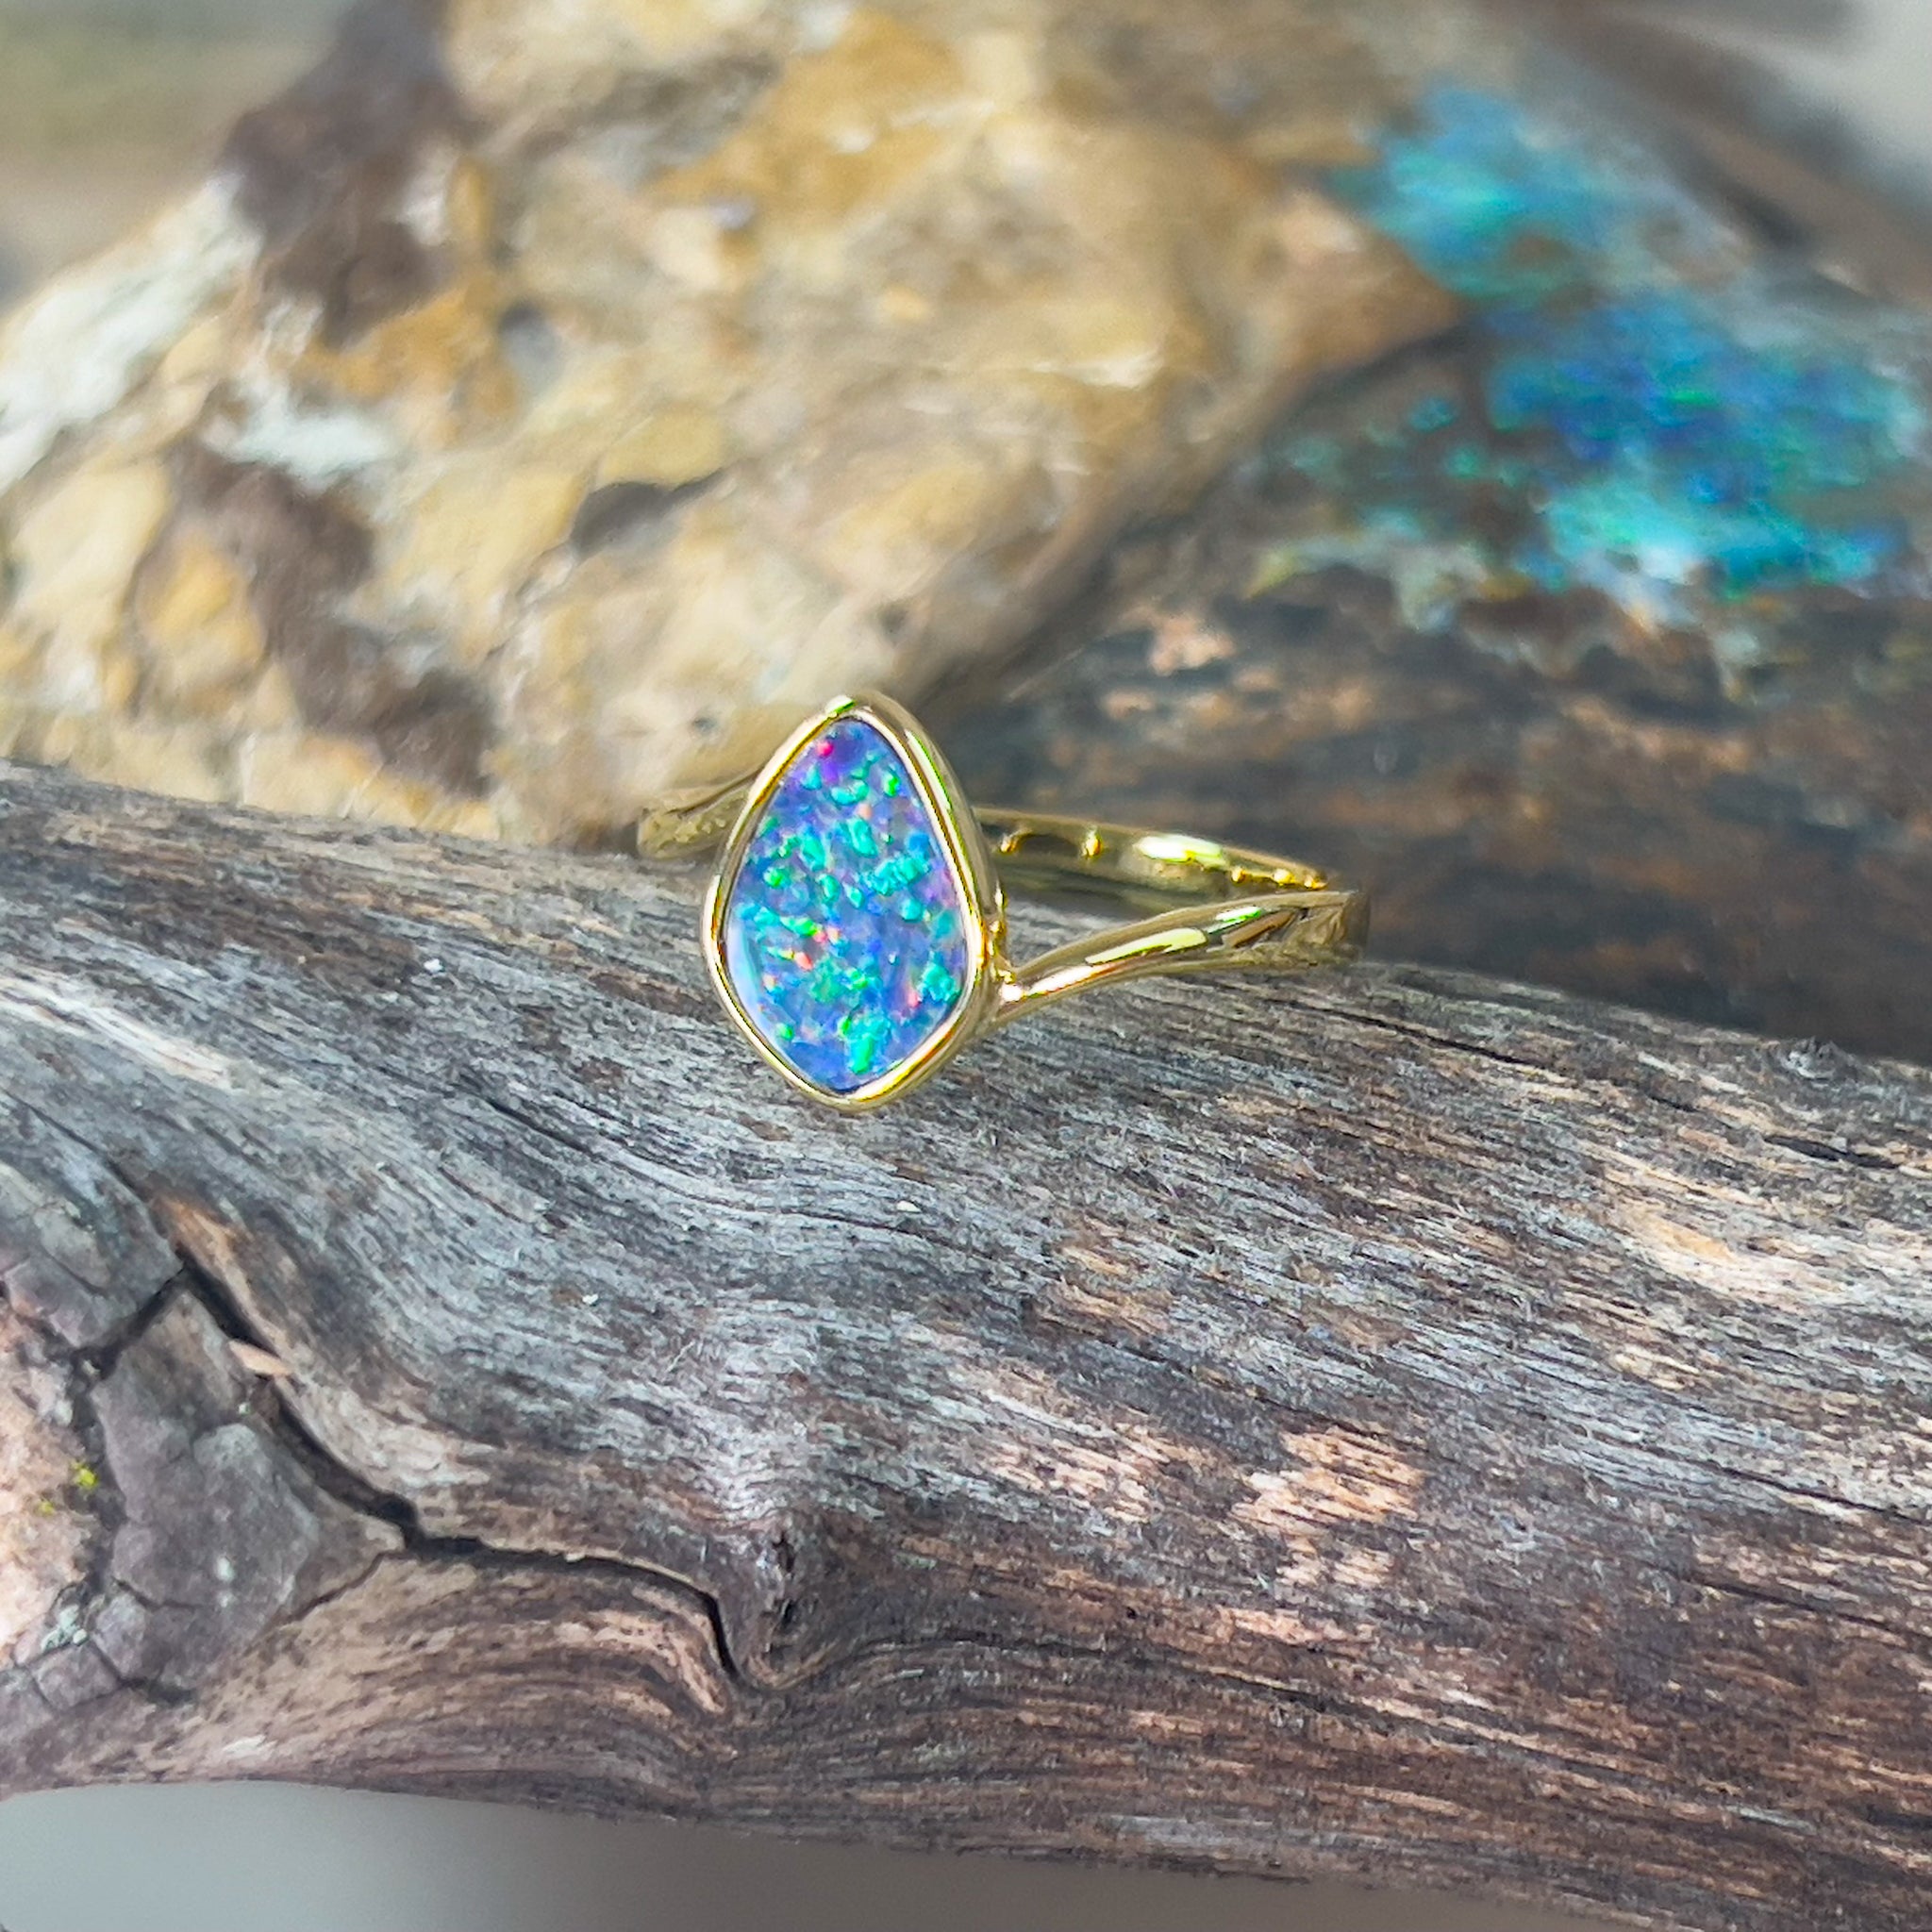 Gold plated sterling silver opal doublet ring - Masterpiece Jewellery Opal & Gems Sydney Australia | Online Shop